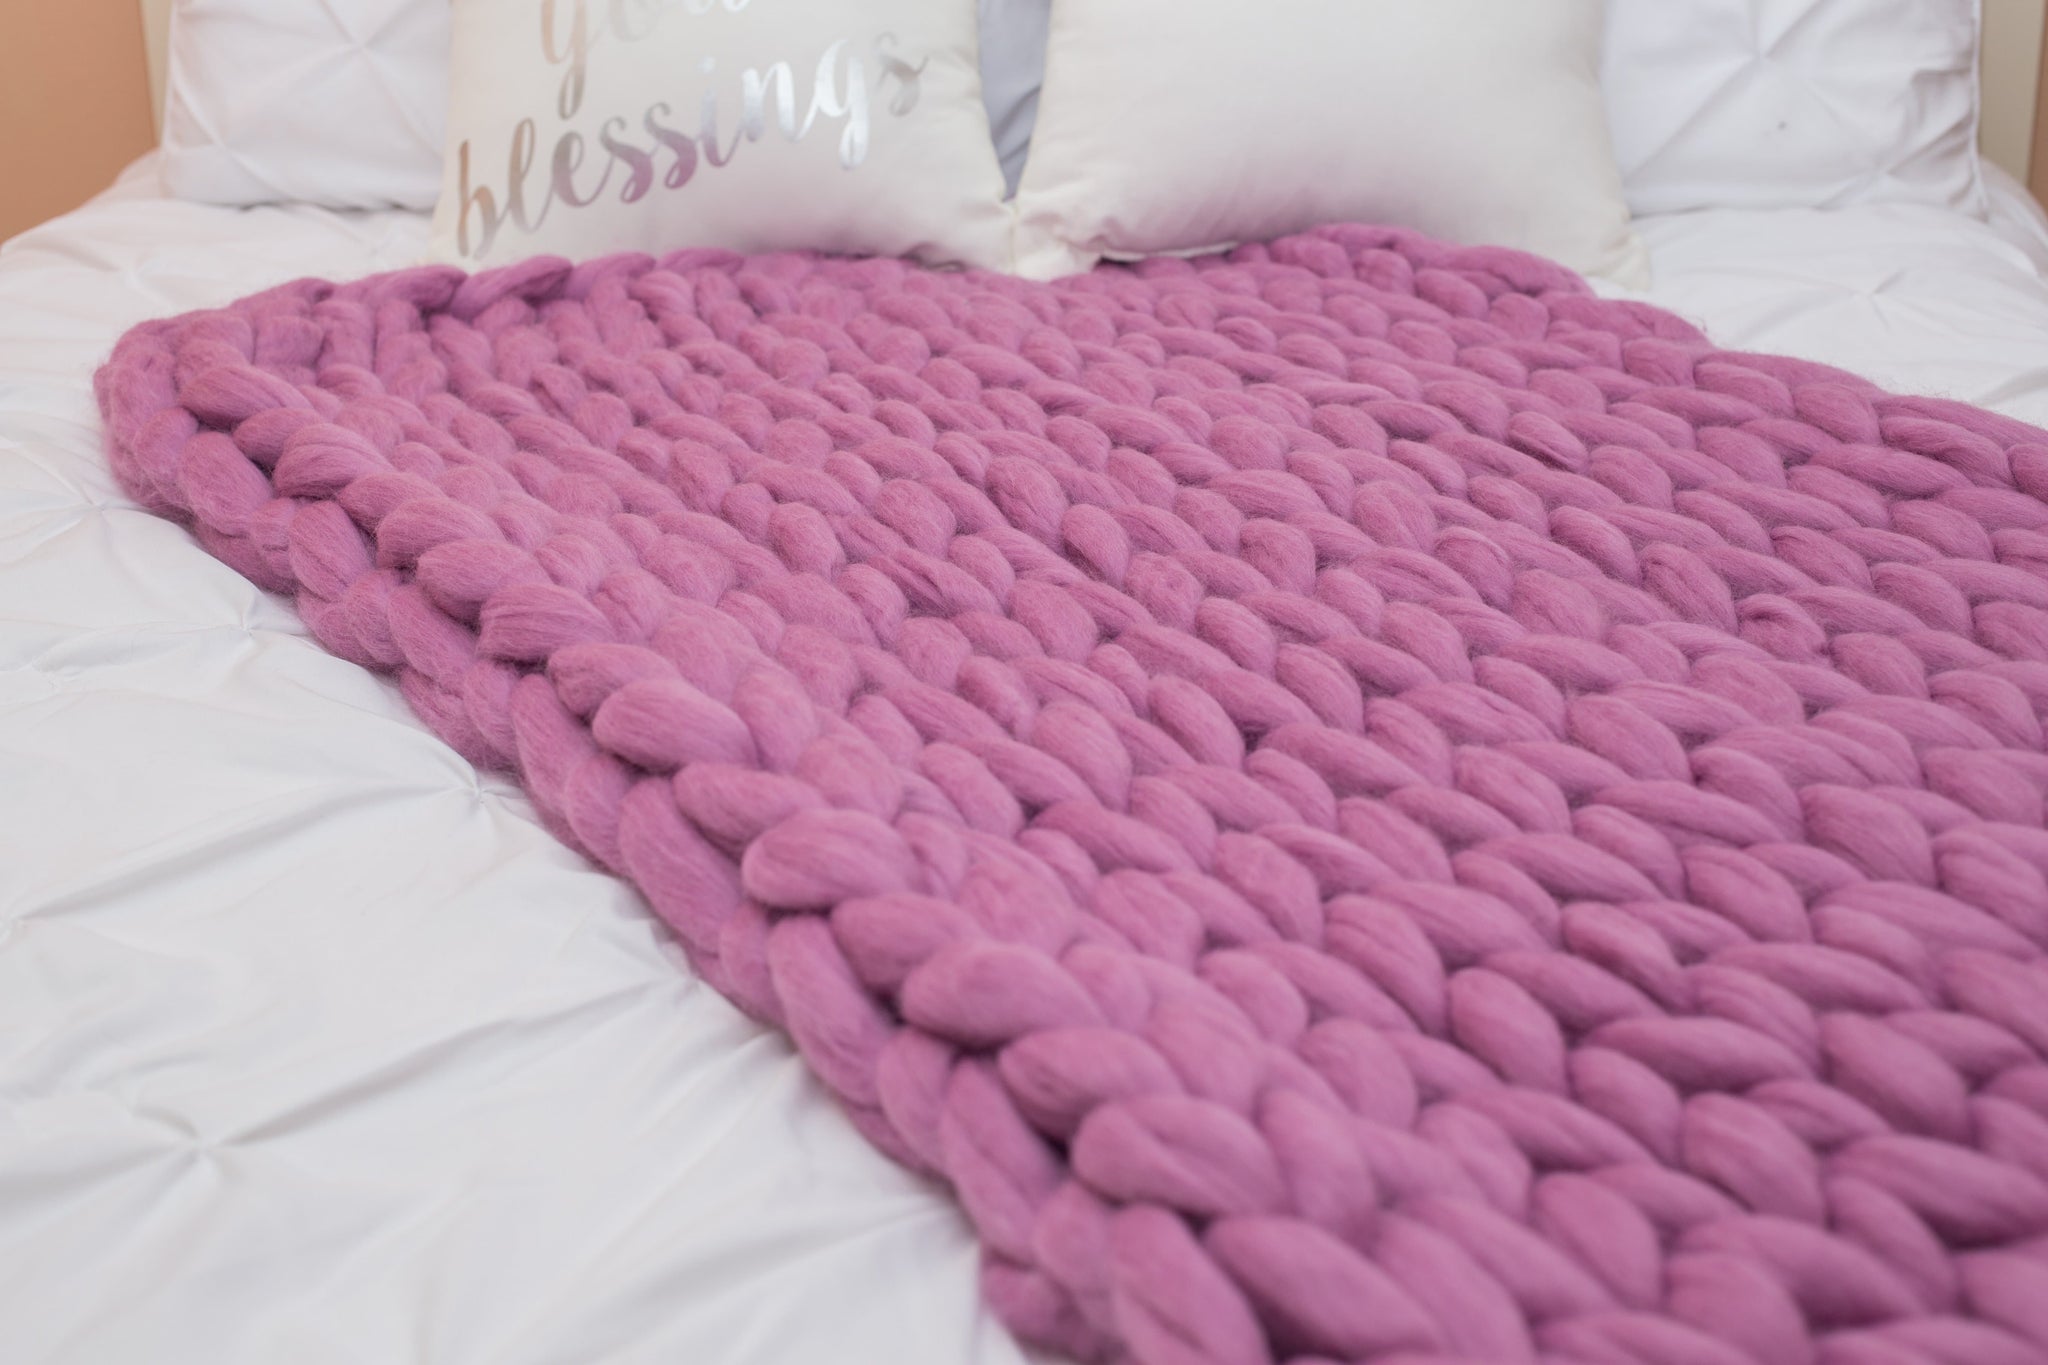 DIY Knit Kit, Blanket 35x50. Merino Wool and Giant Wooden Needles – BeCozi